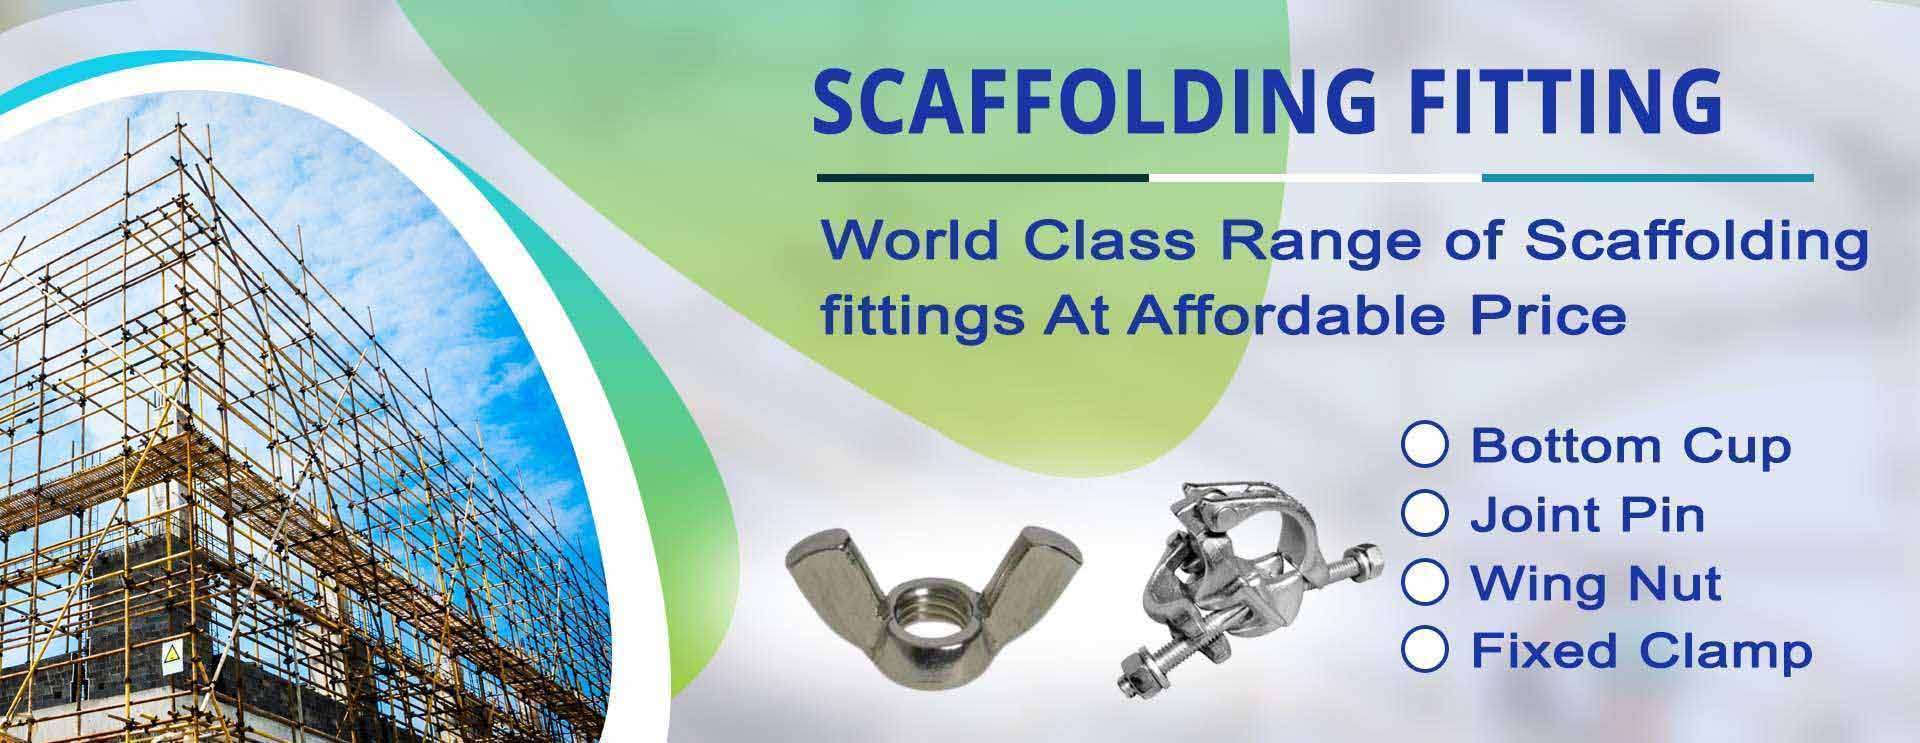 Adjustable Steel Scaffolding Jack Suppliers in Ghaziabad